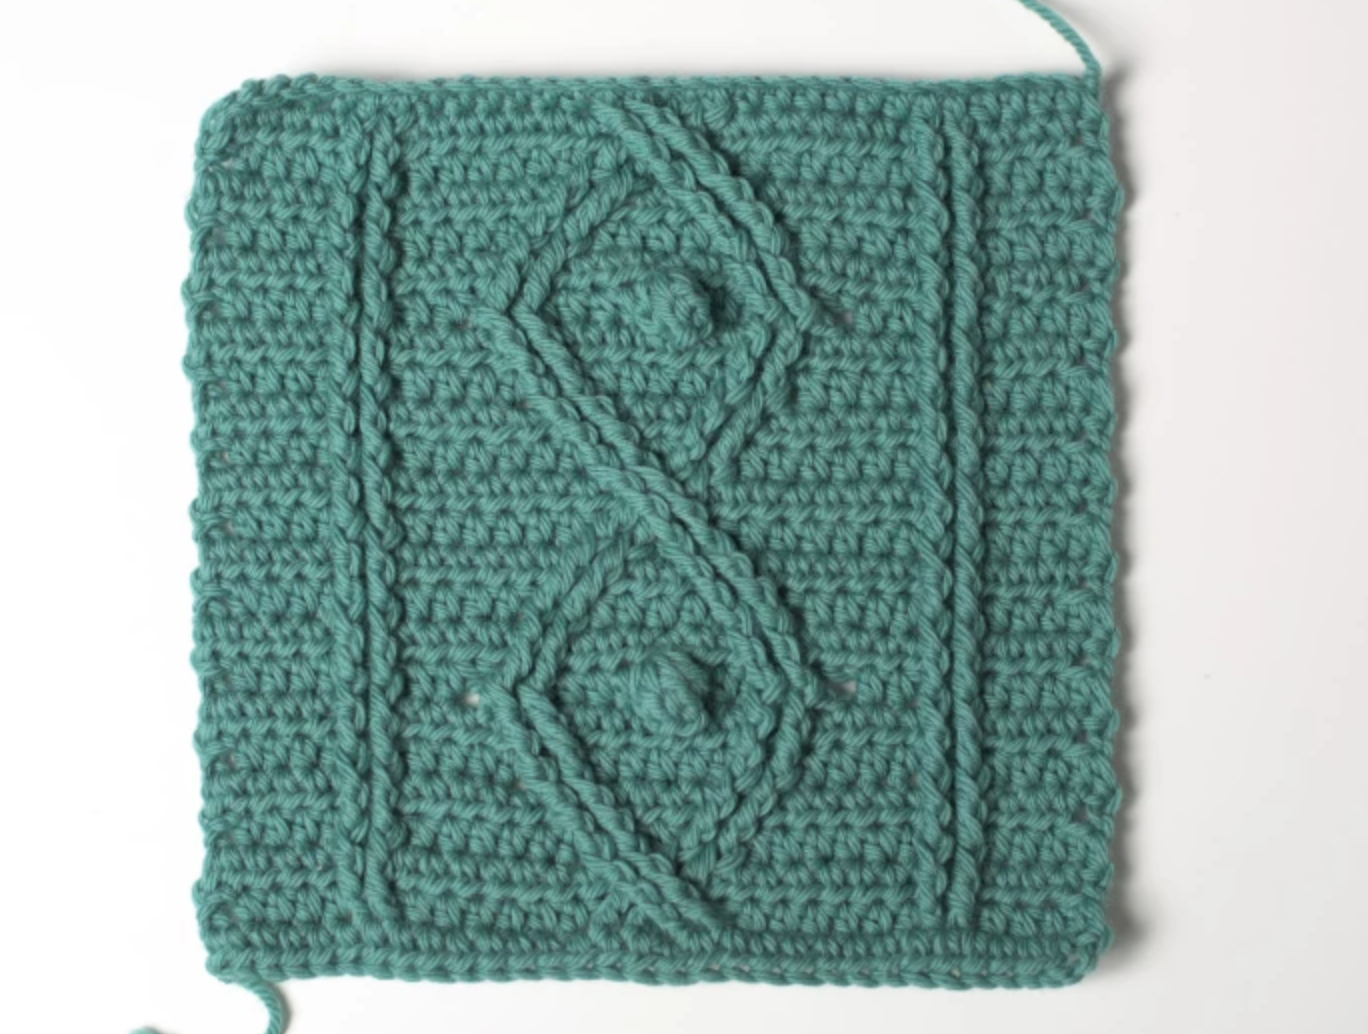 crochet traveling stitches